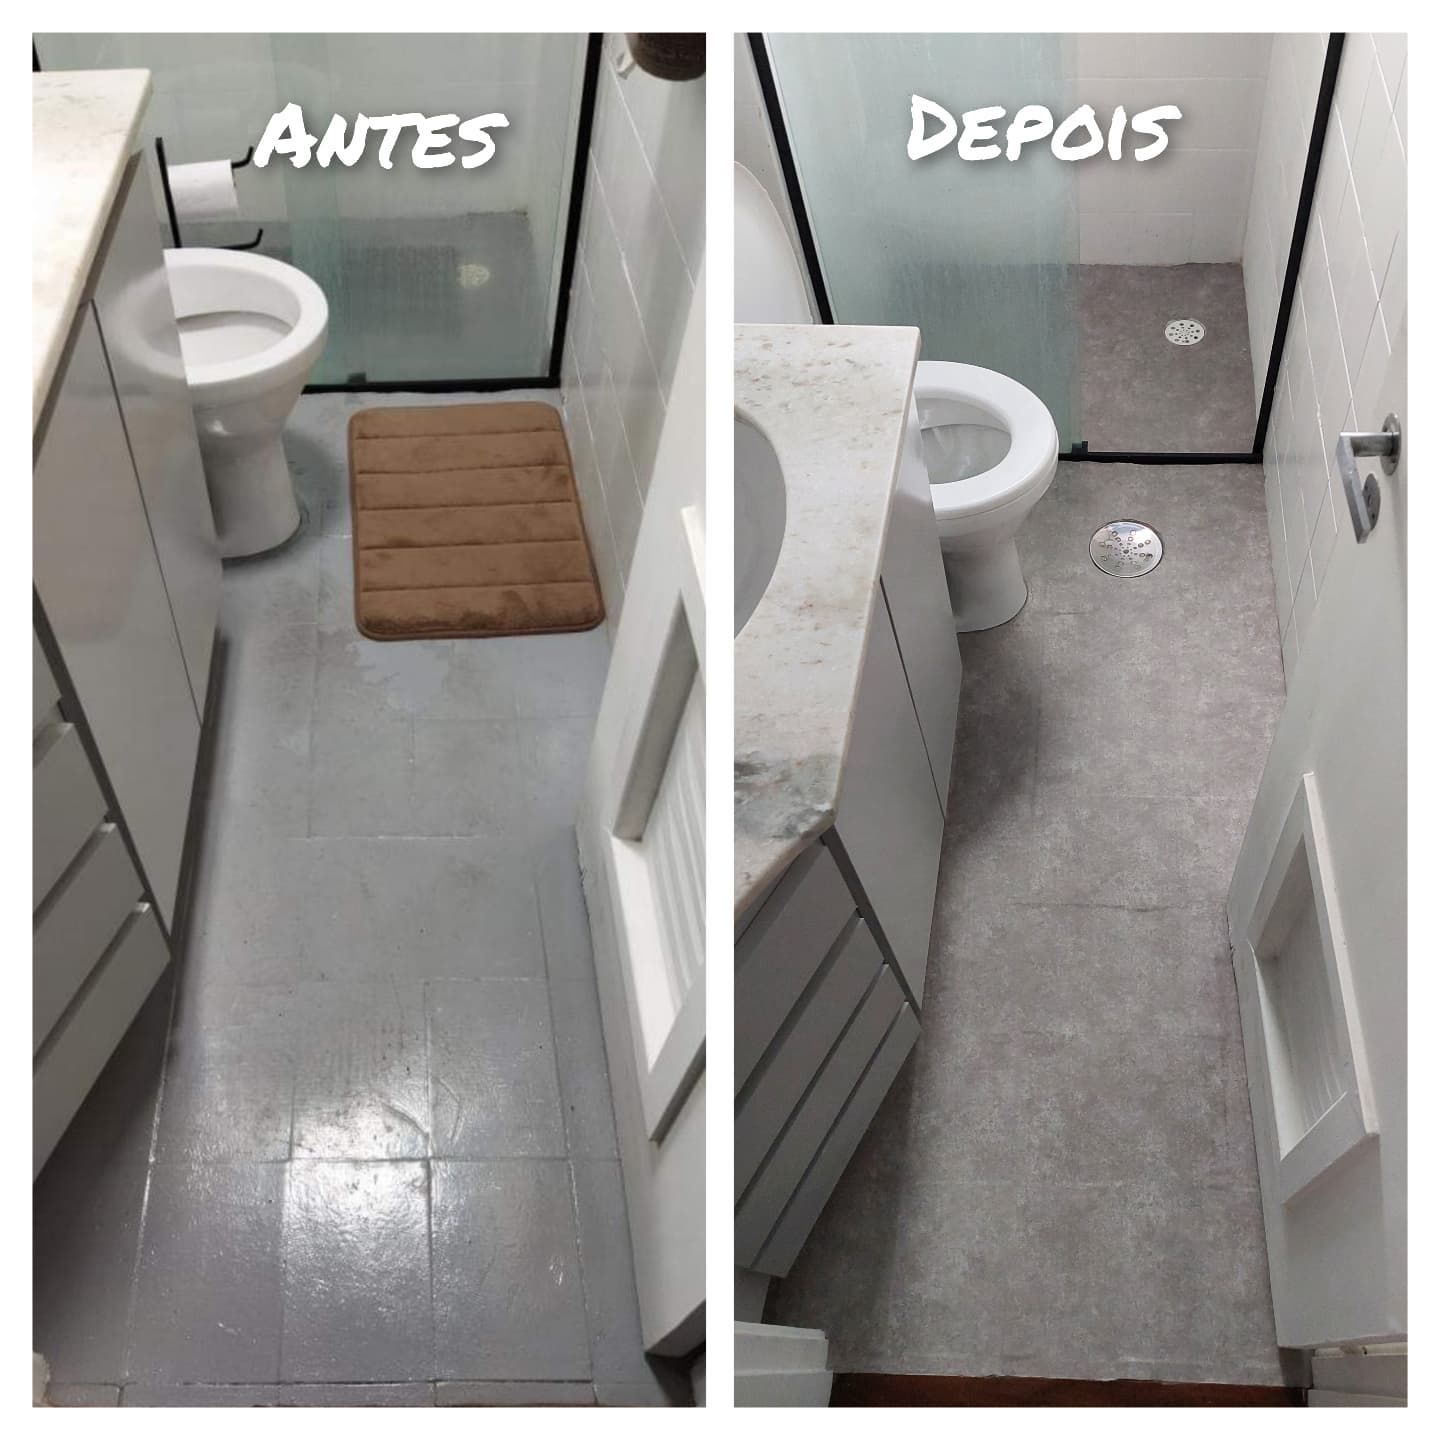 Vinil Adesivo Cimento Queimado instalado no piso.
Rápido e prático, sem sujeira.
#olhomagicoadesivos #adesivodeparede #banheiro #rapidoesemsujeira